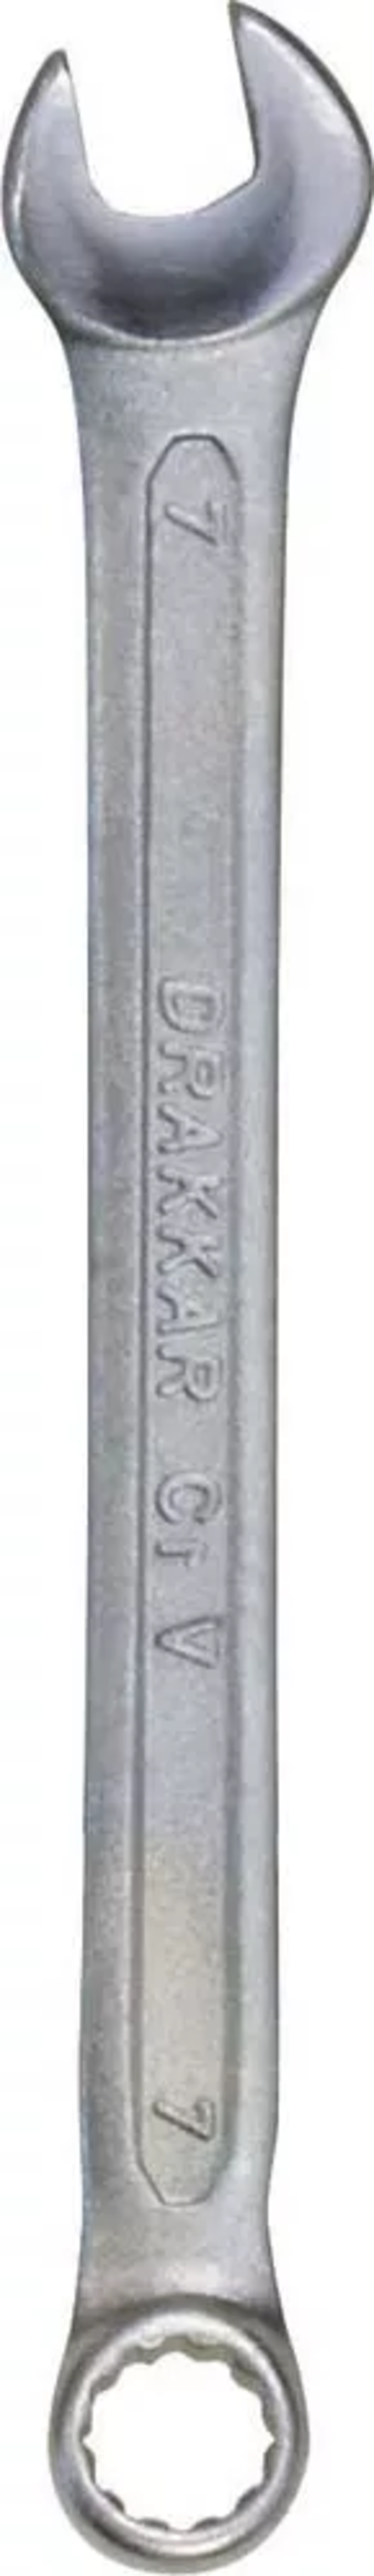 Cle mixte tete polie 7mm DRAKKAR TOOLS - 13757